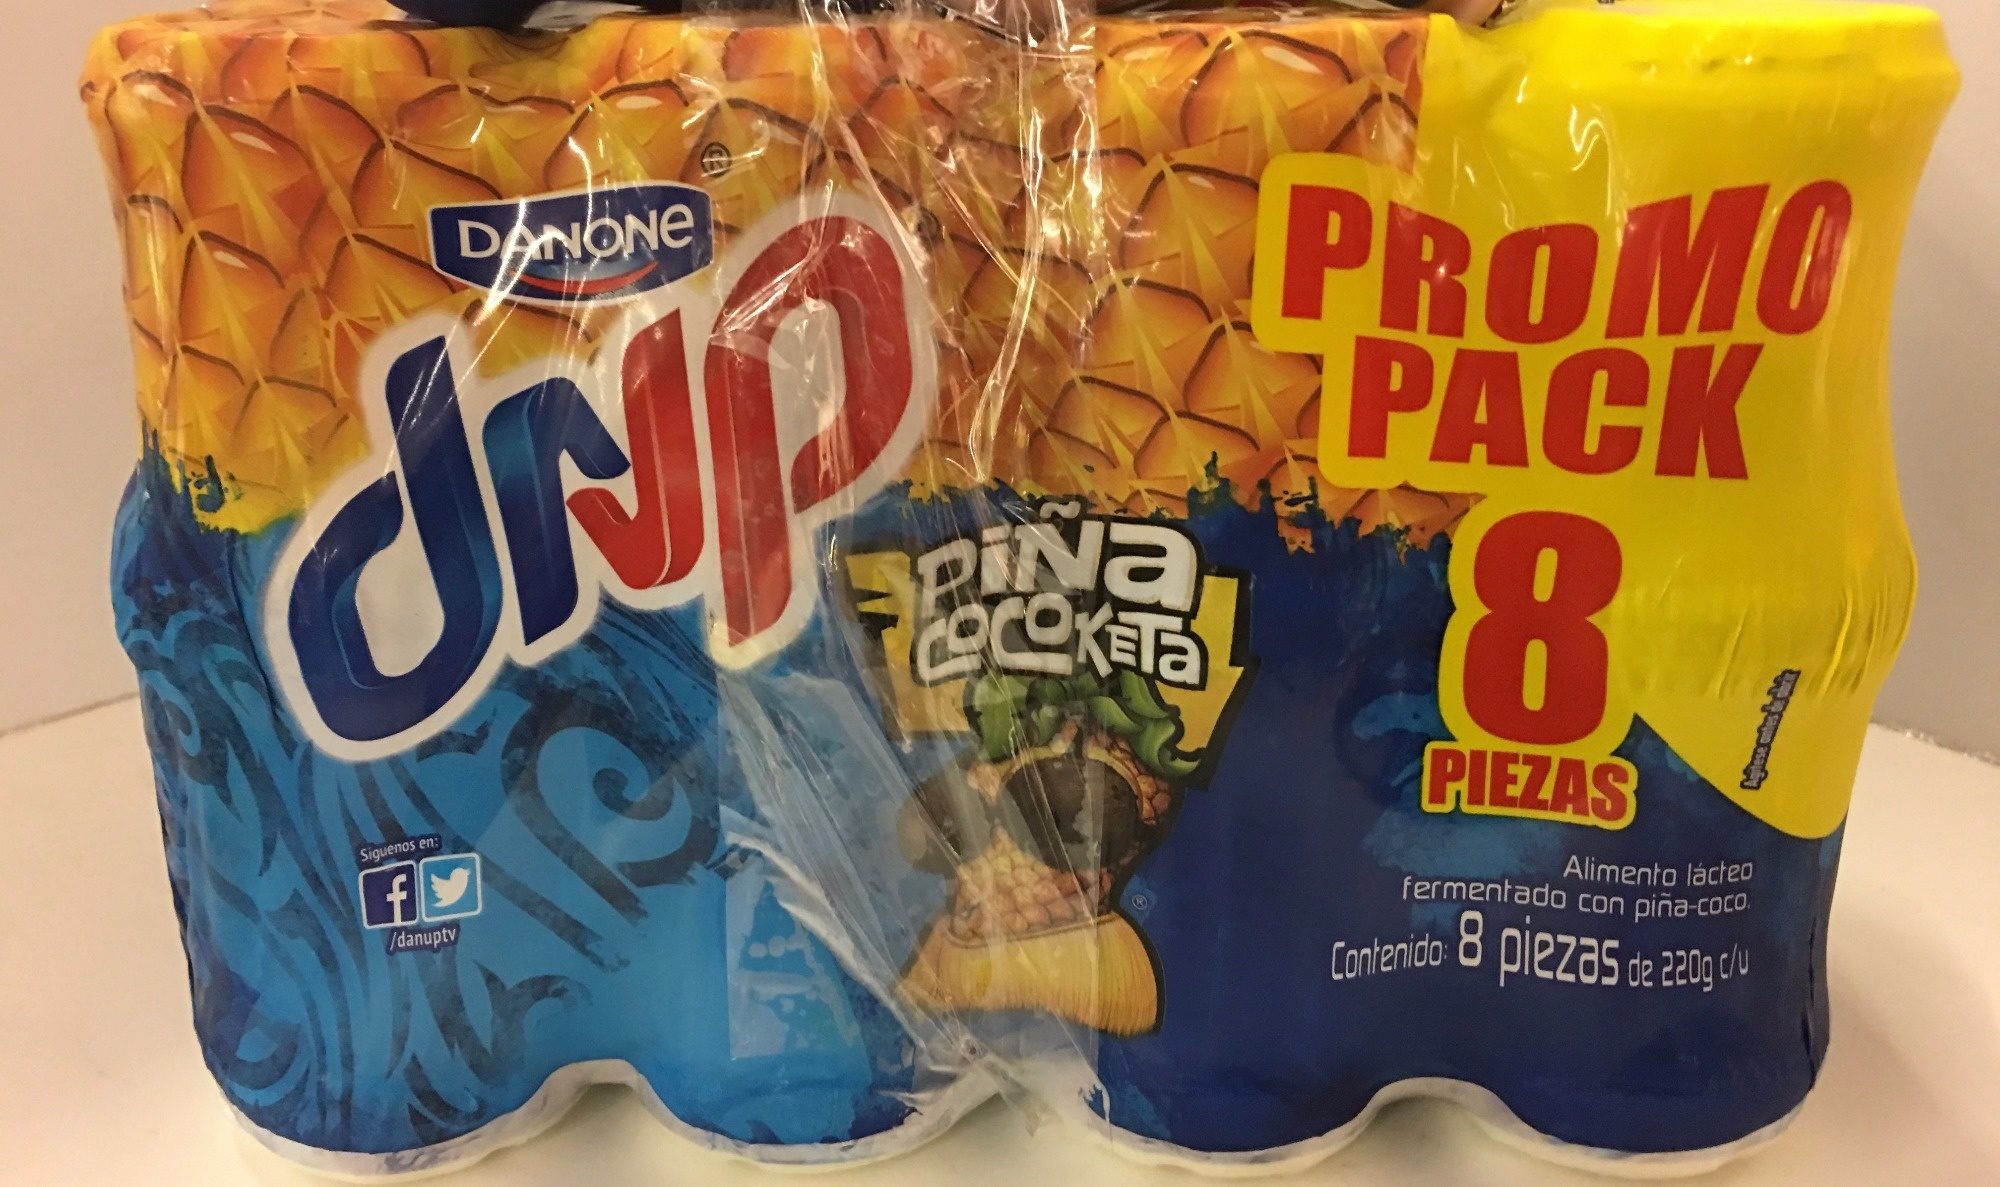 DNP PIÑA COKETA PROMO PACK - Producto